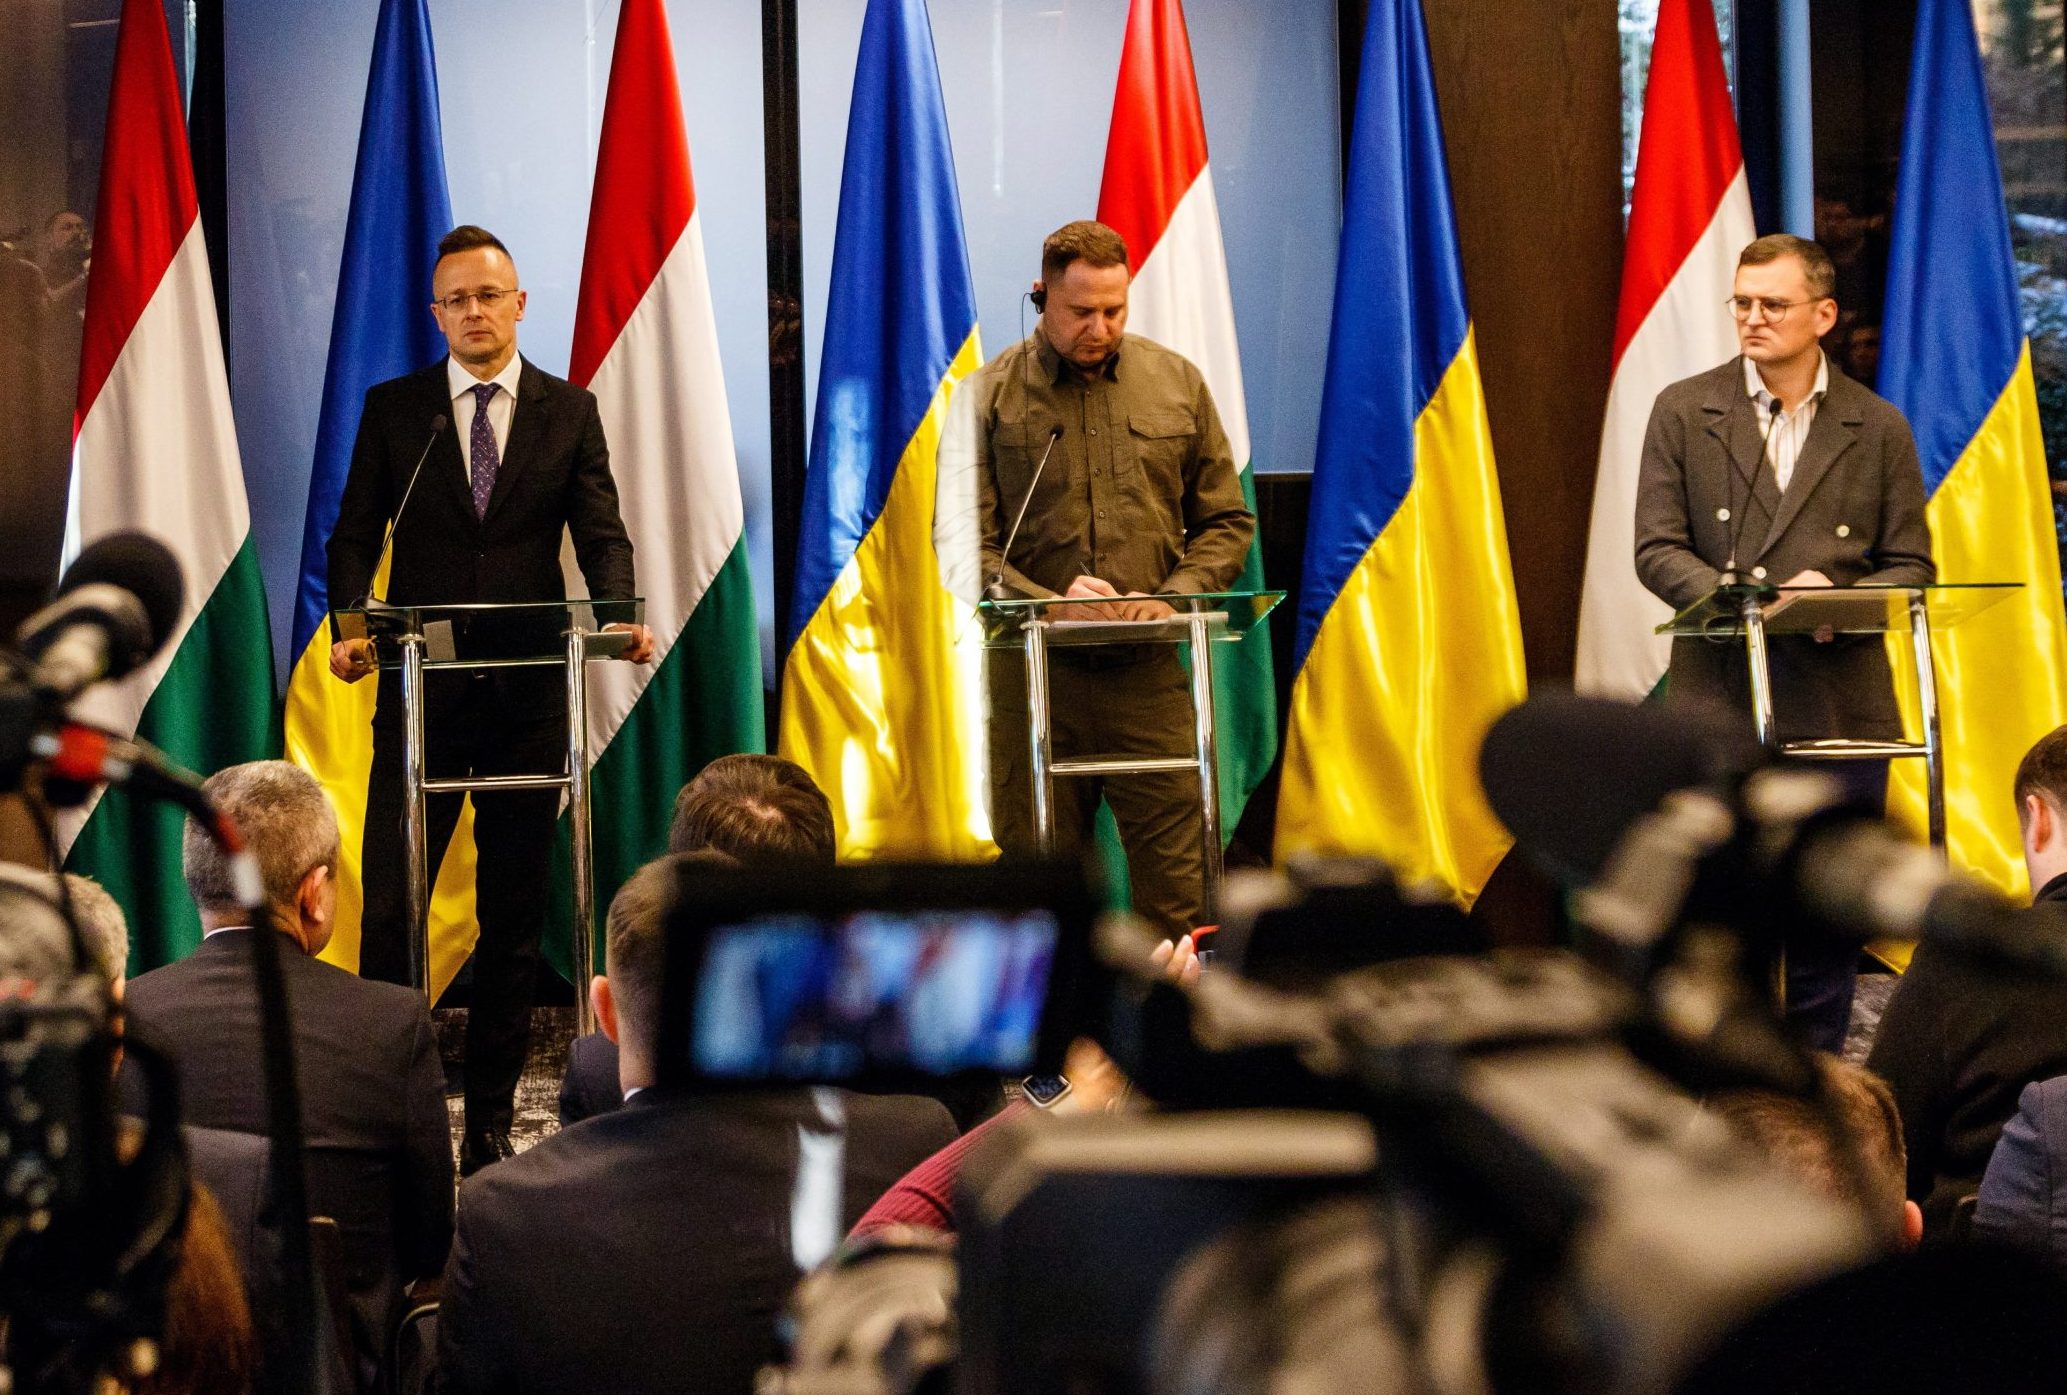 Hungary-Ukraine Talks: Progress in Restoring Hungarian Minority Rights